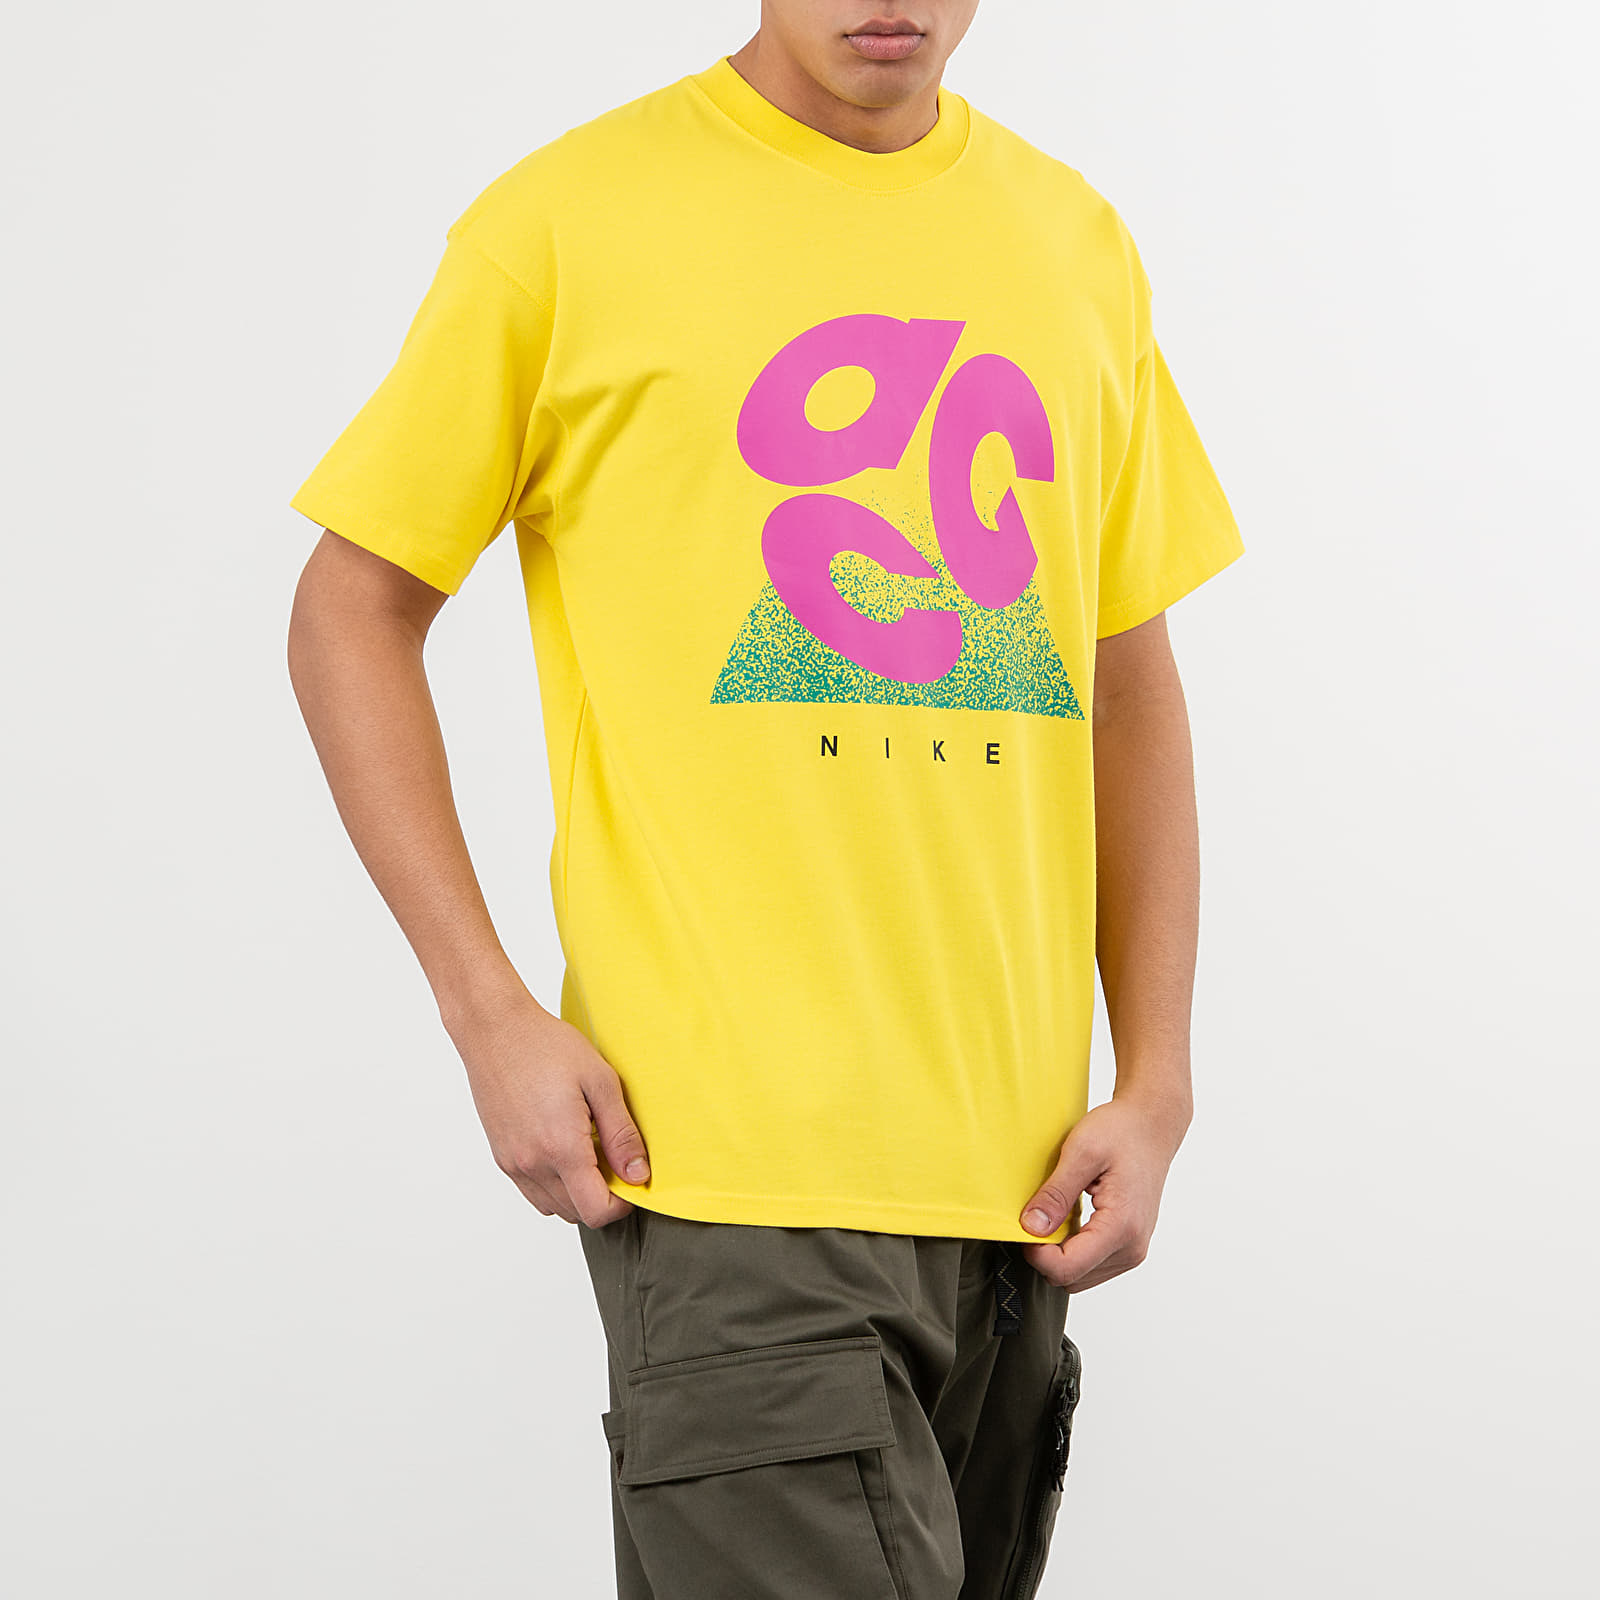 Tričká Nike NRG ACG Evo Logo Tee Opti Yellow/ Active Fuchsia